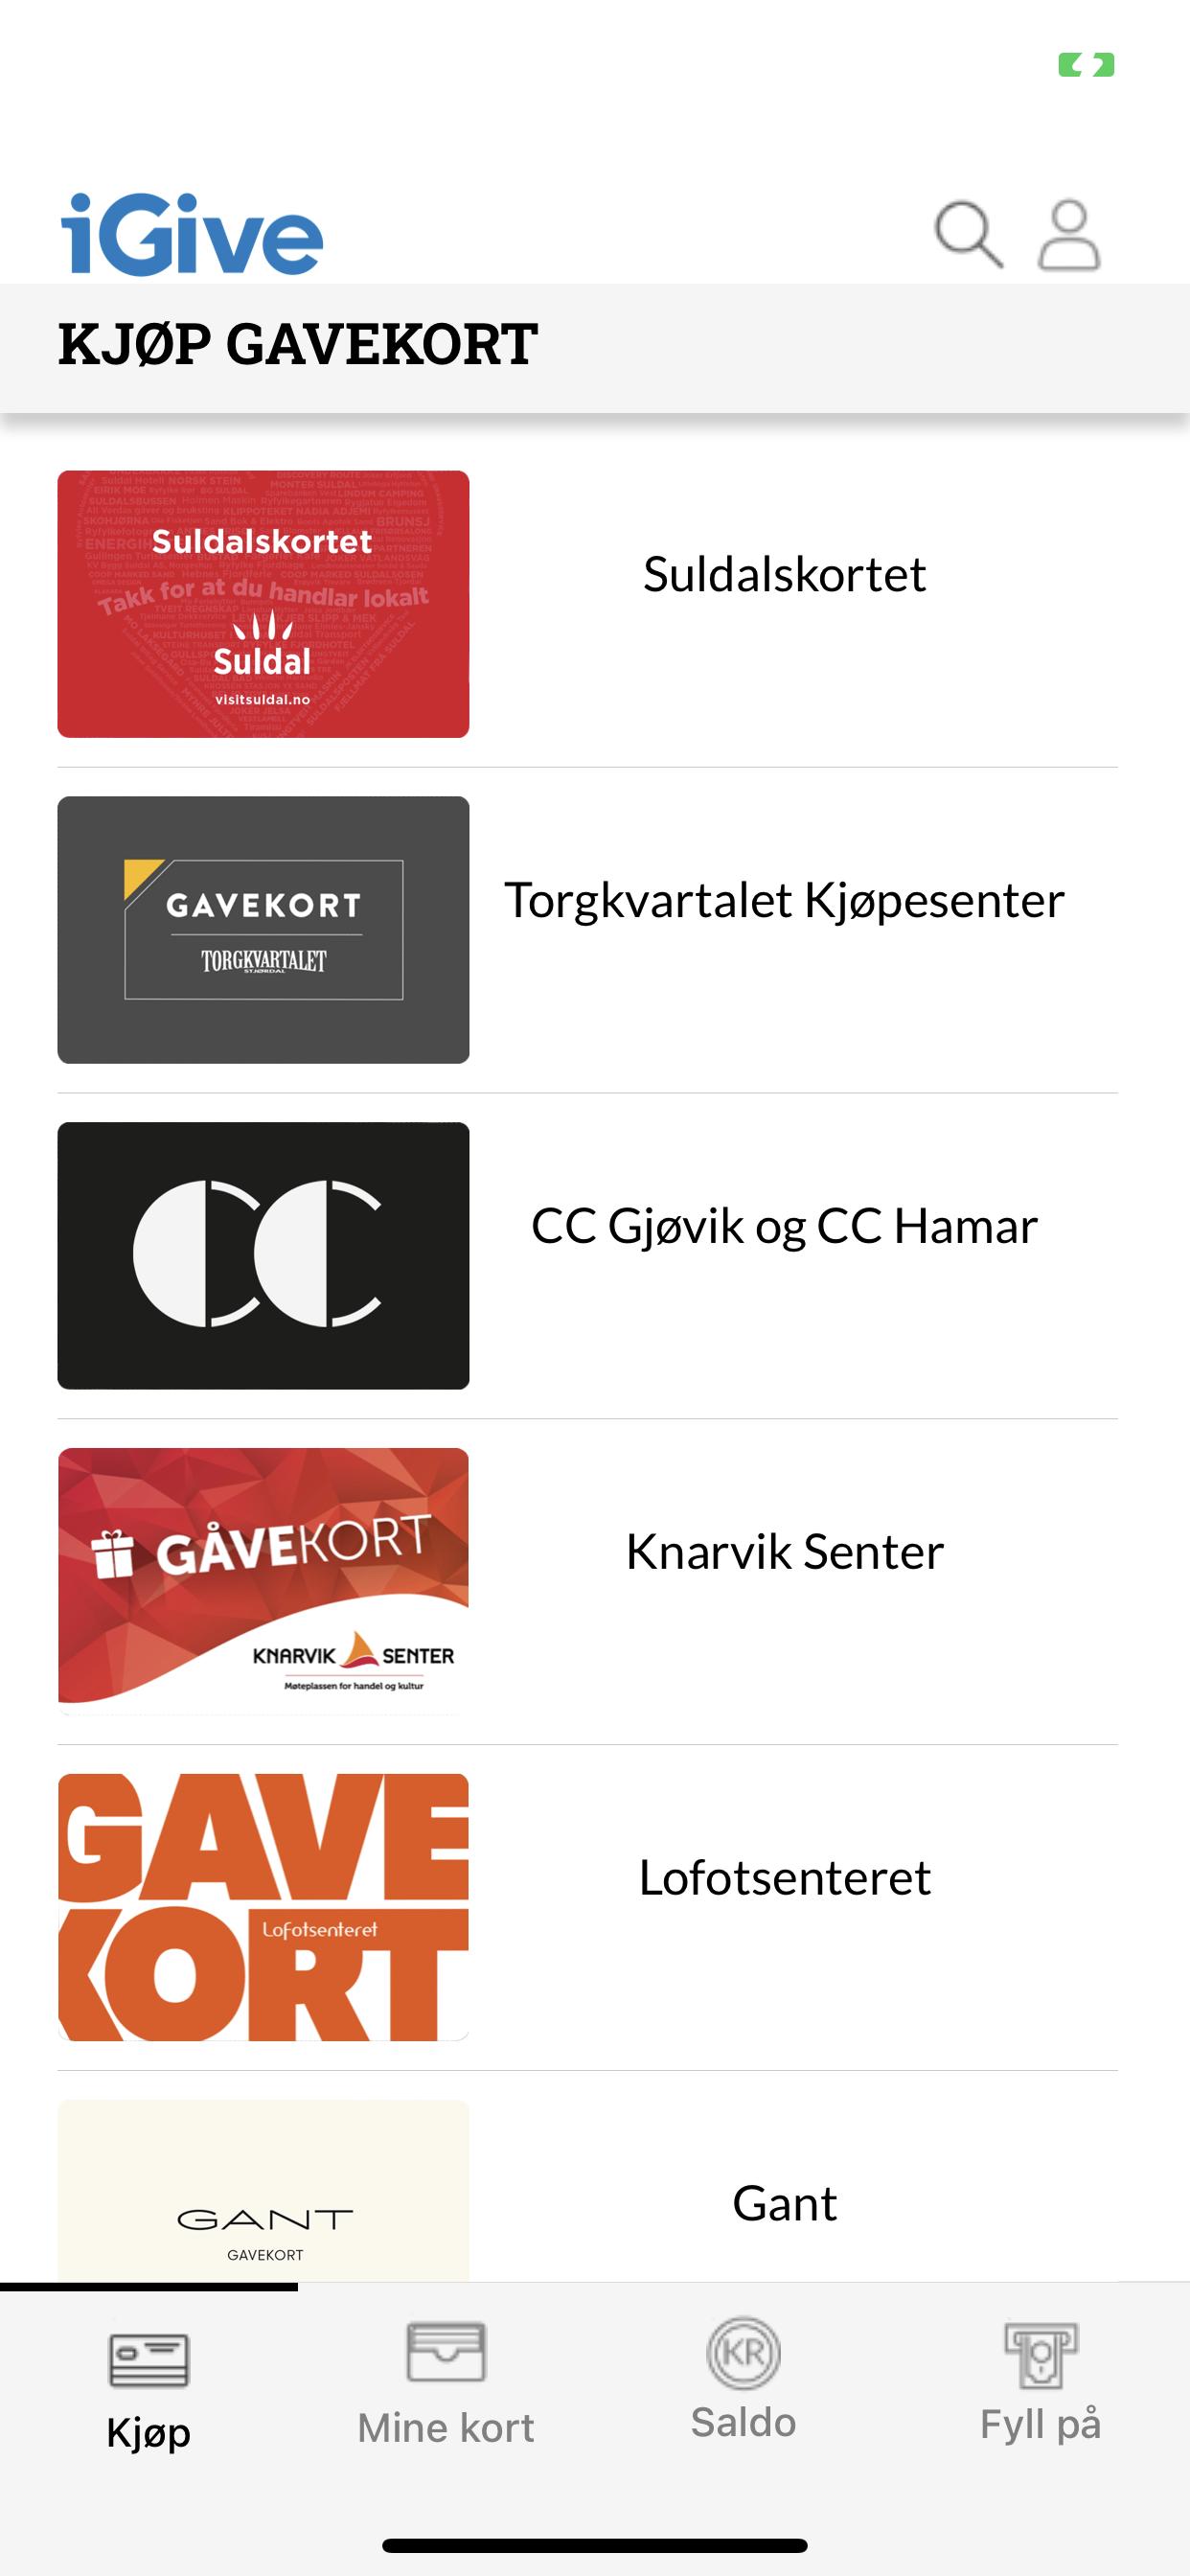 iGive Gavekort APK for Android Download